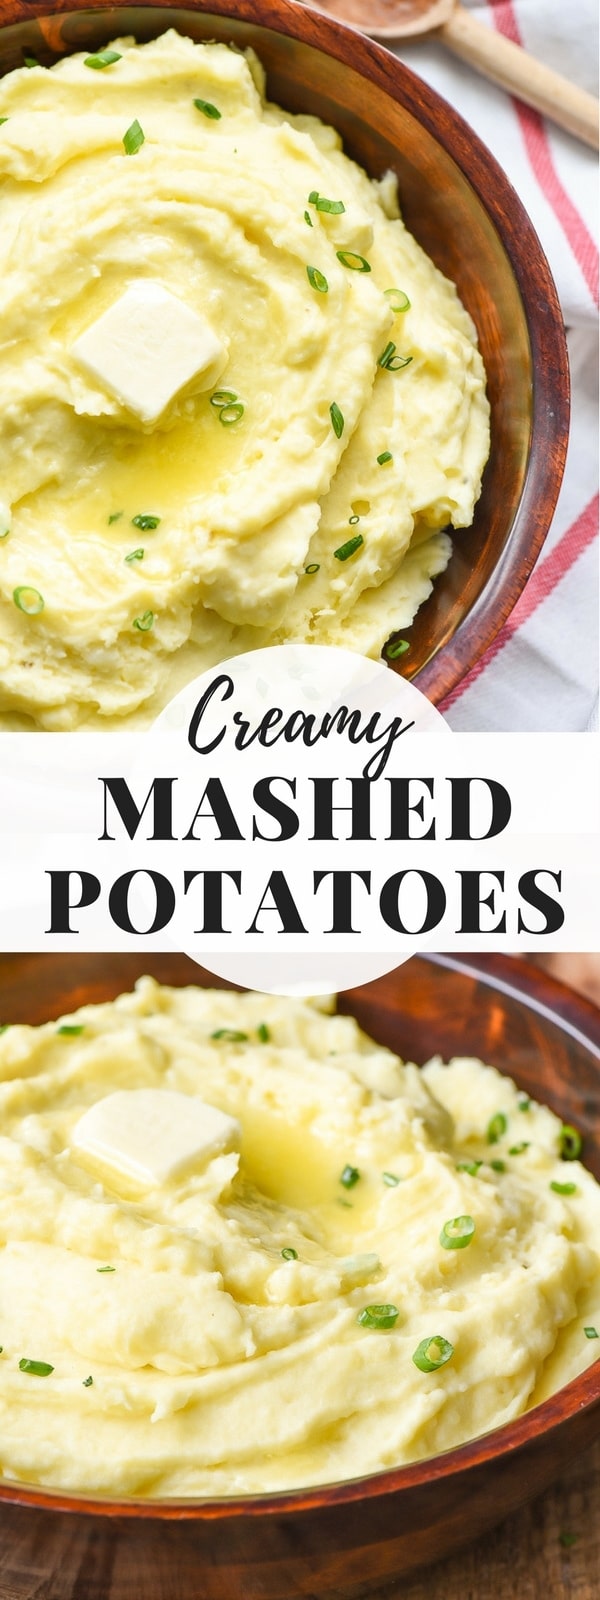 How To Make Creamy Mashed Potatoes | NeighborFood